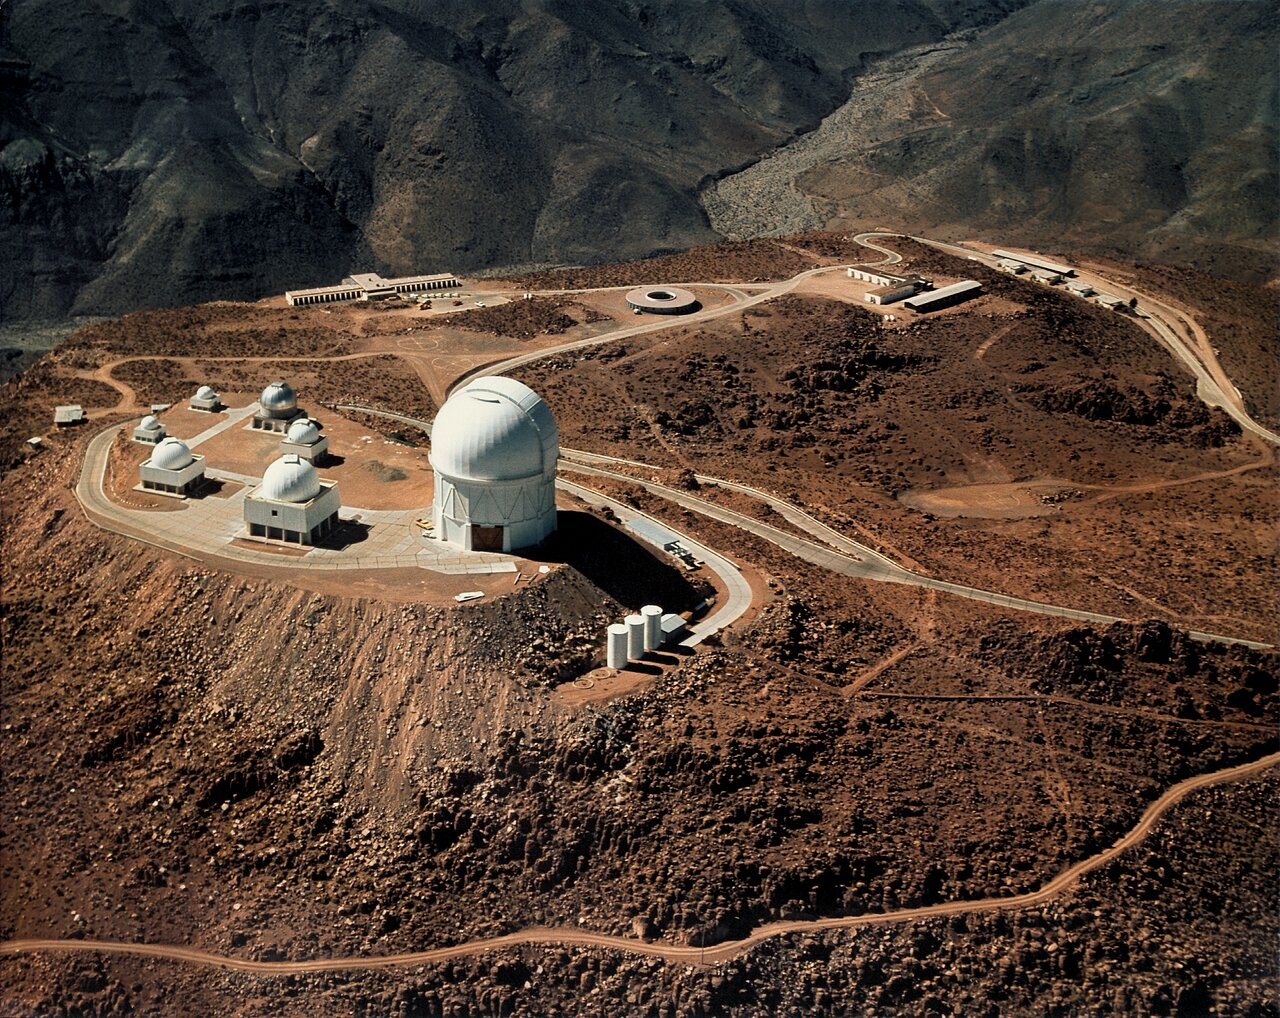 cerro tololo observatory tour